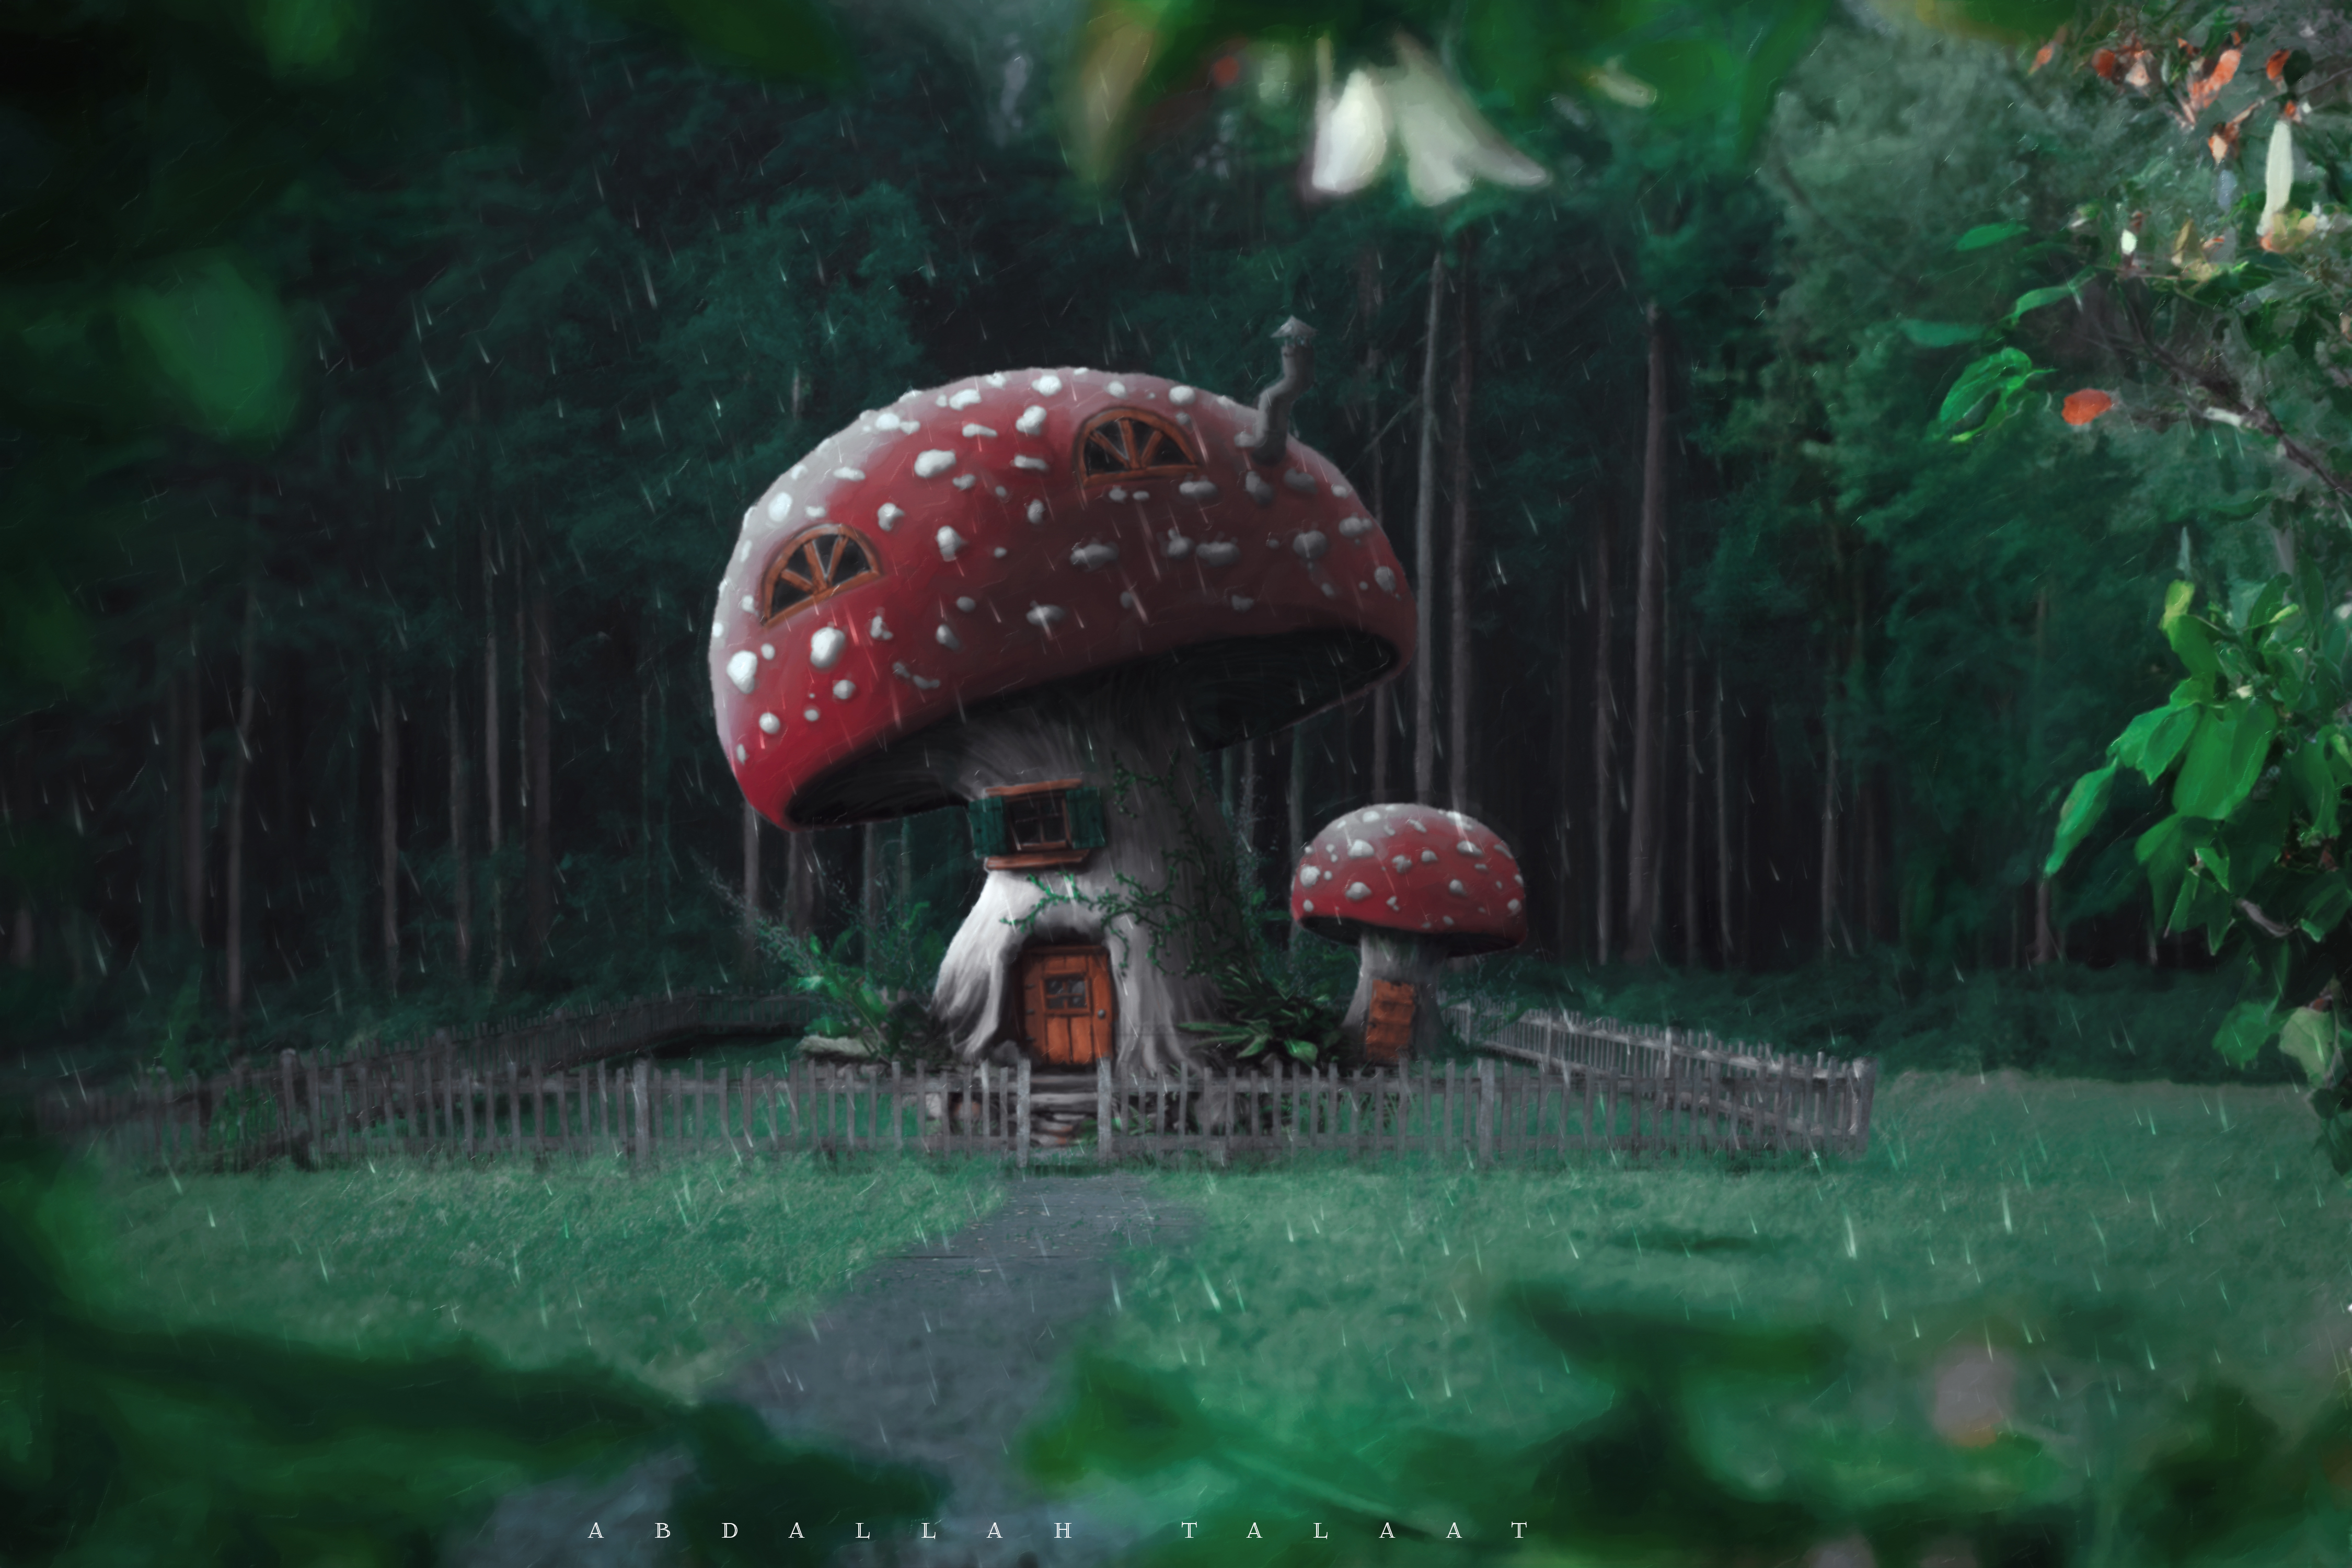 Mushroom Abdallah Talaat Concept Art Photo Manipulation Forest Green House Digital Art Watermarked 4500x3000